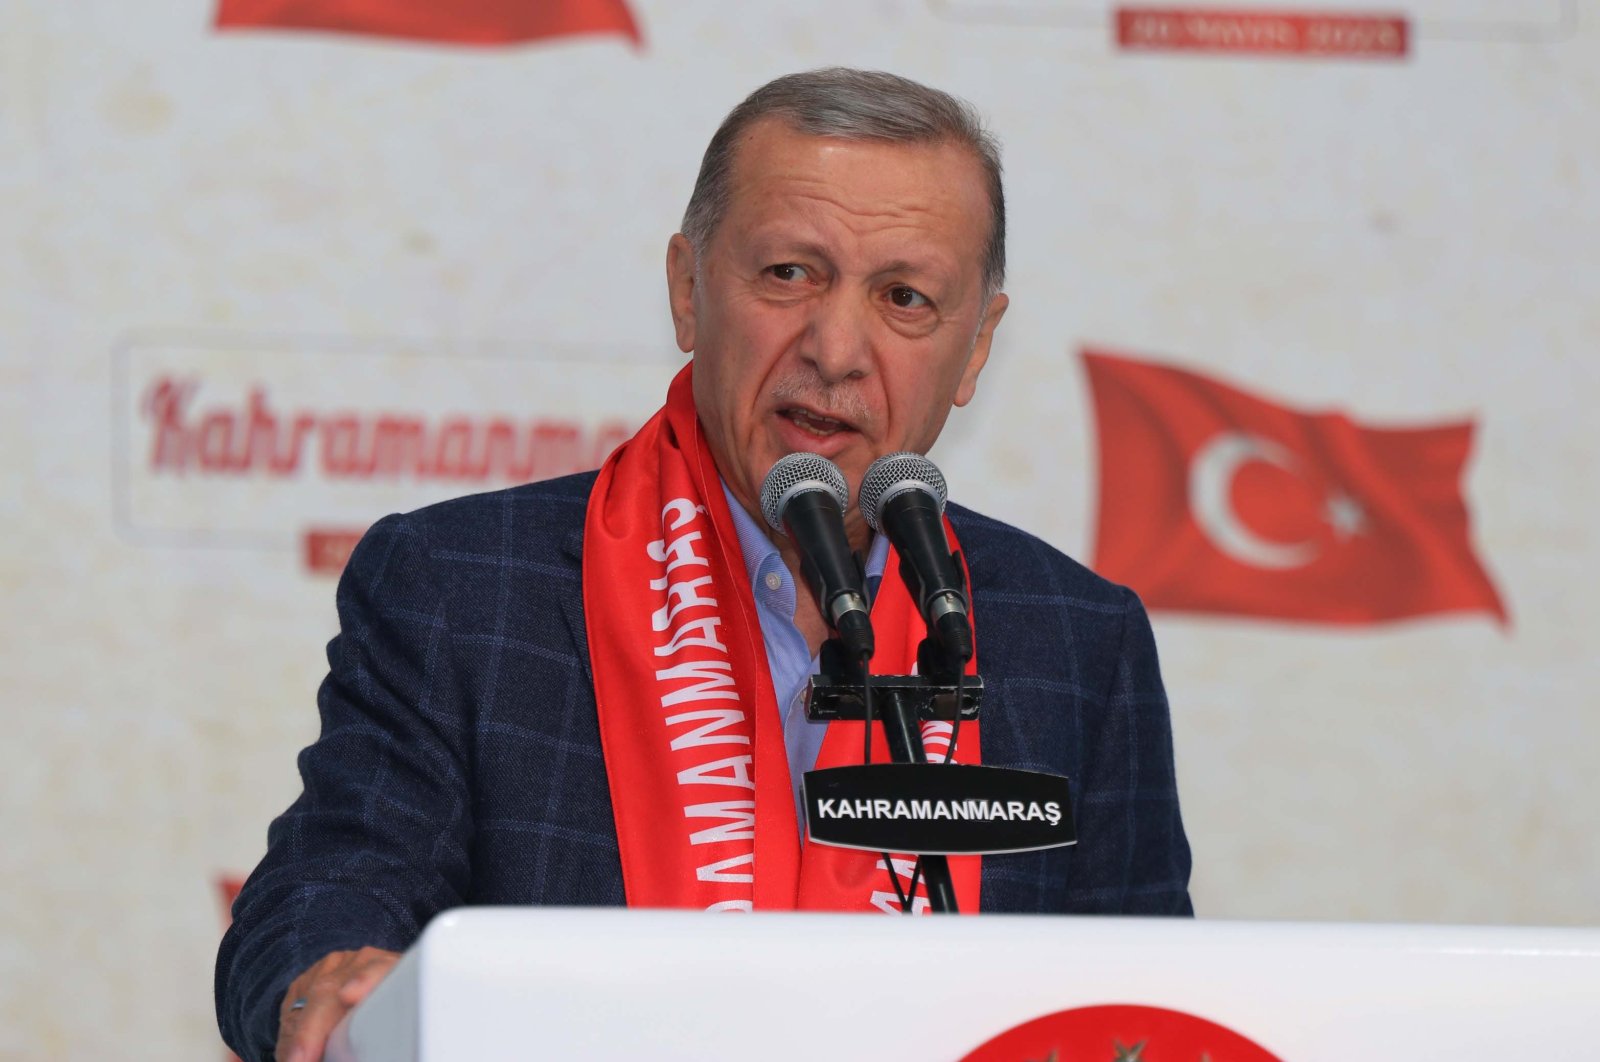 President Recep Tayyip Erdoğan speaks at a rally in the earthquake-stricken Kahramanmaraş province, Türkiye, May 20, 2023. (DHA Photo)